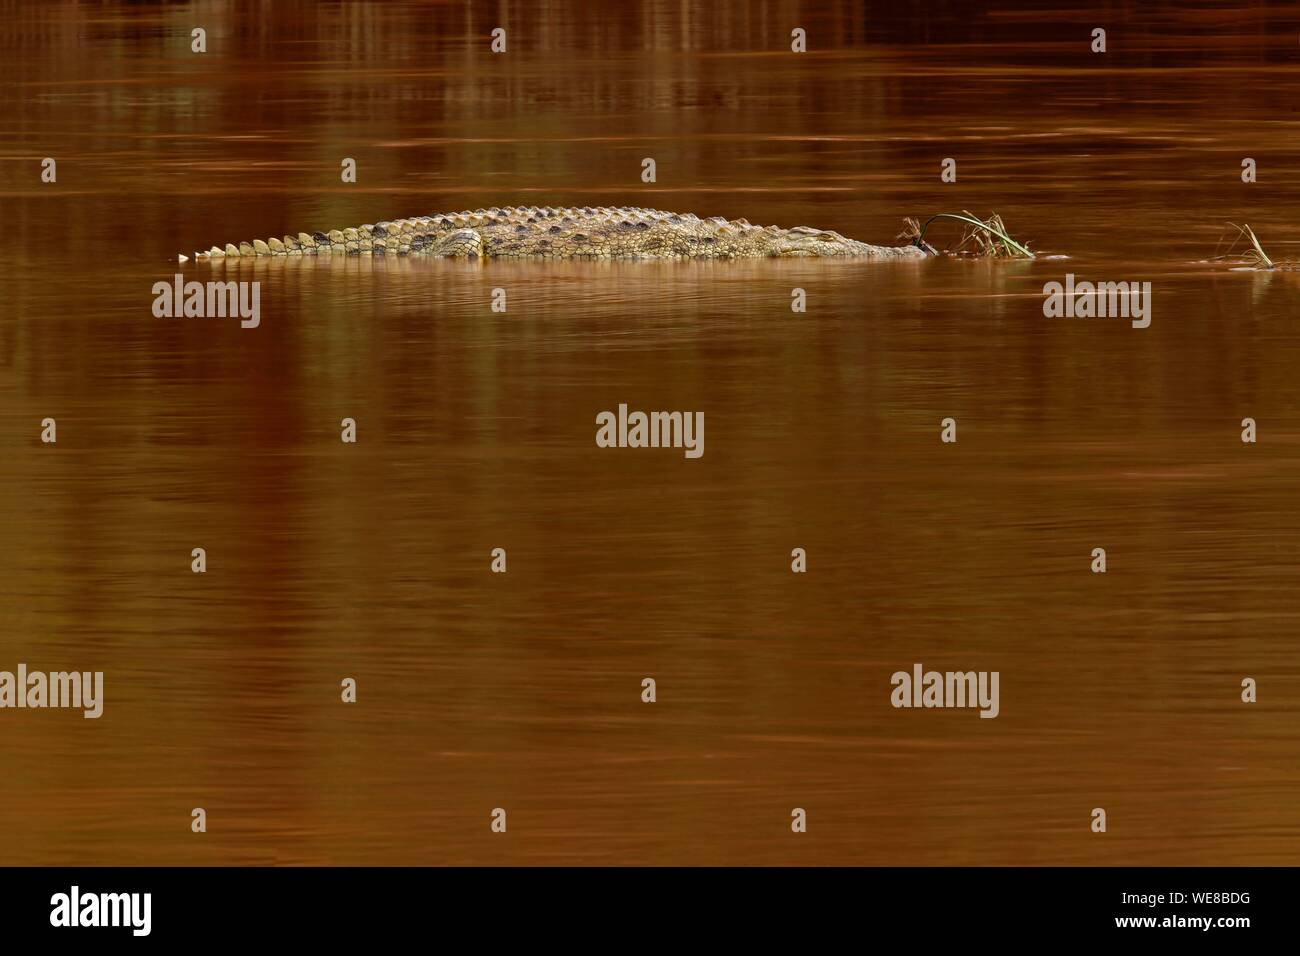 Burundi, Ruvubu National Park, coccodrillo del Nilo (Crocodylus niloticus), Foto Stock